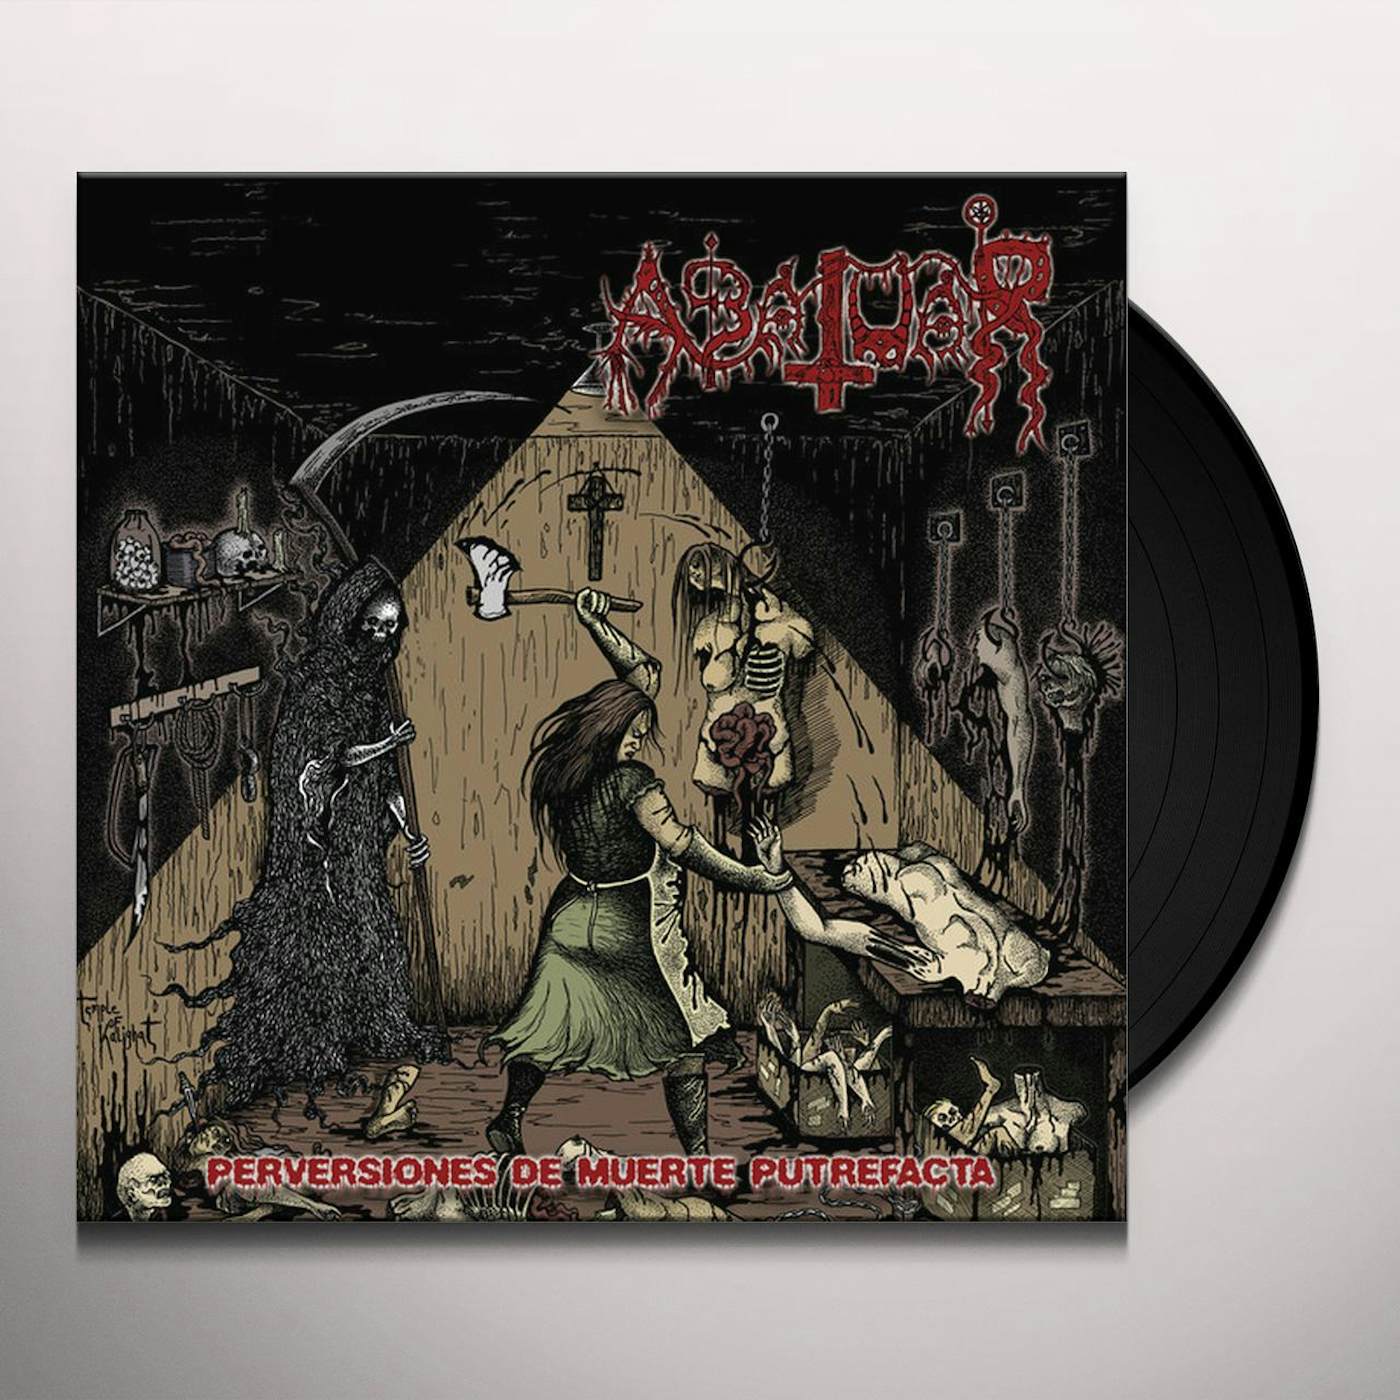 Abatuar Perversiones de Muerte Putrefacta Vinyl Record